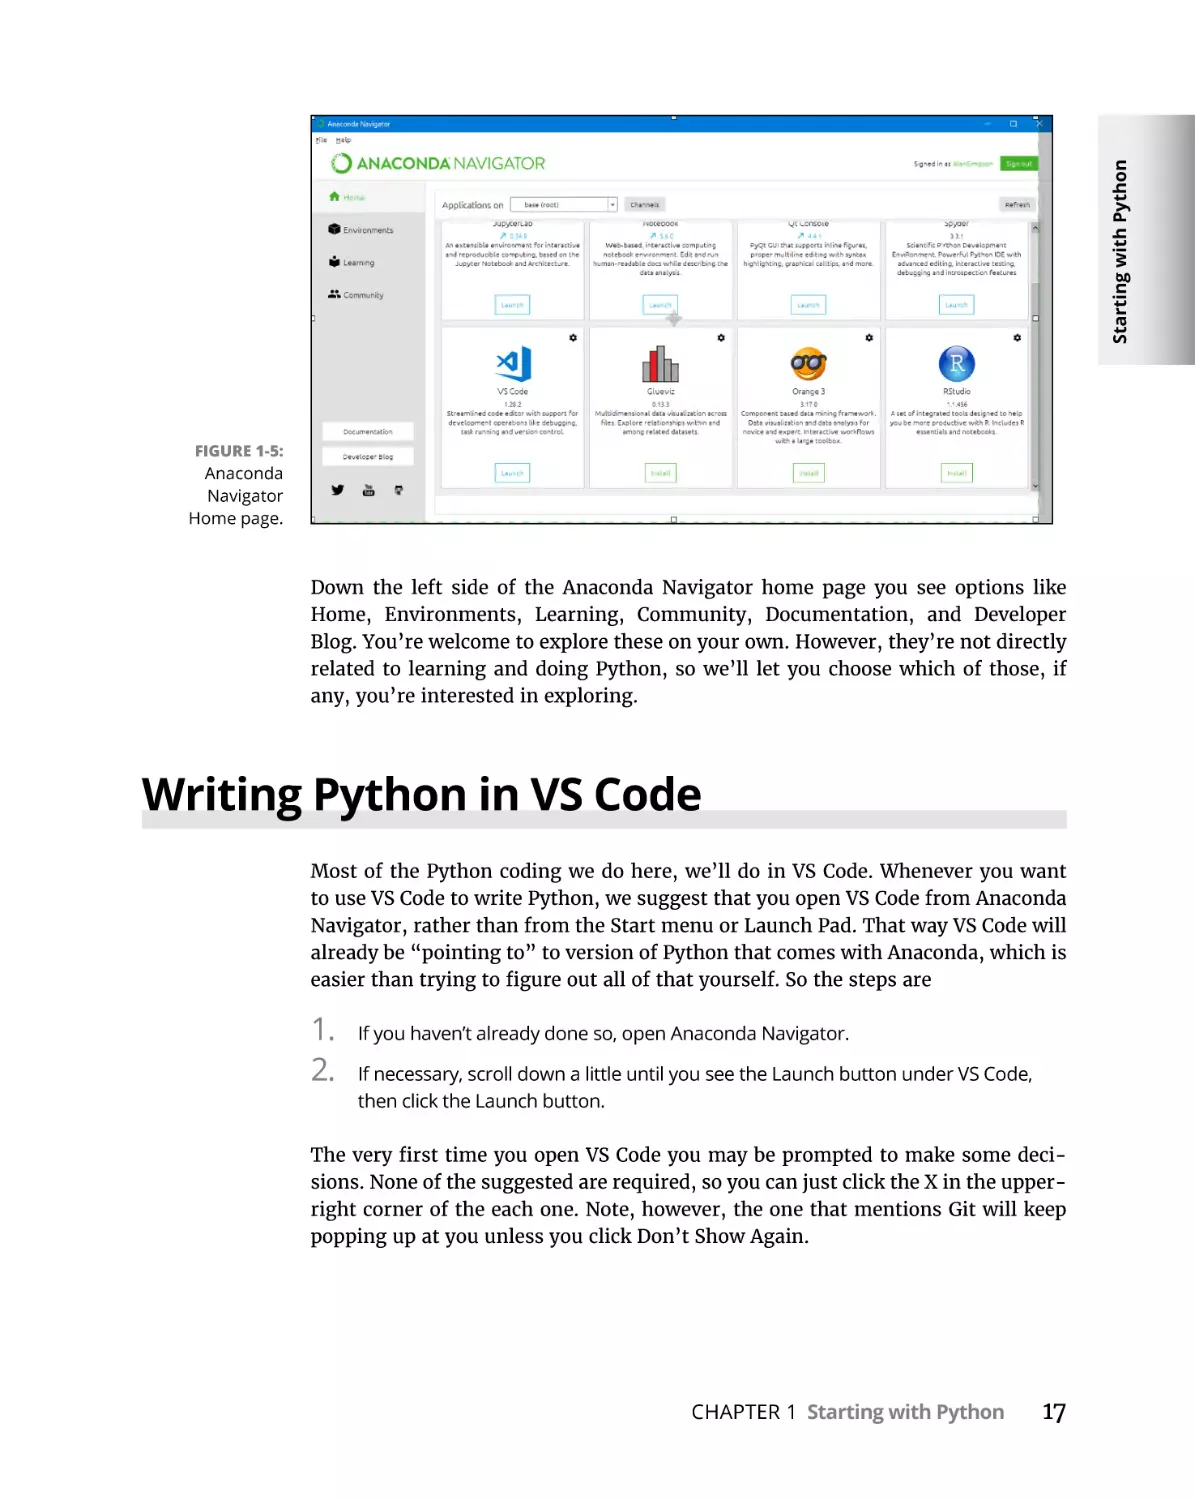 Writing Python in VS Code